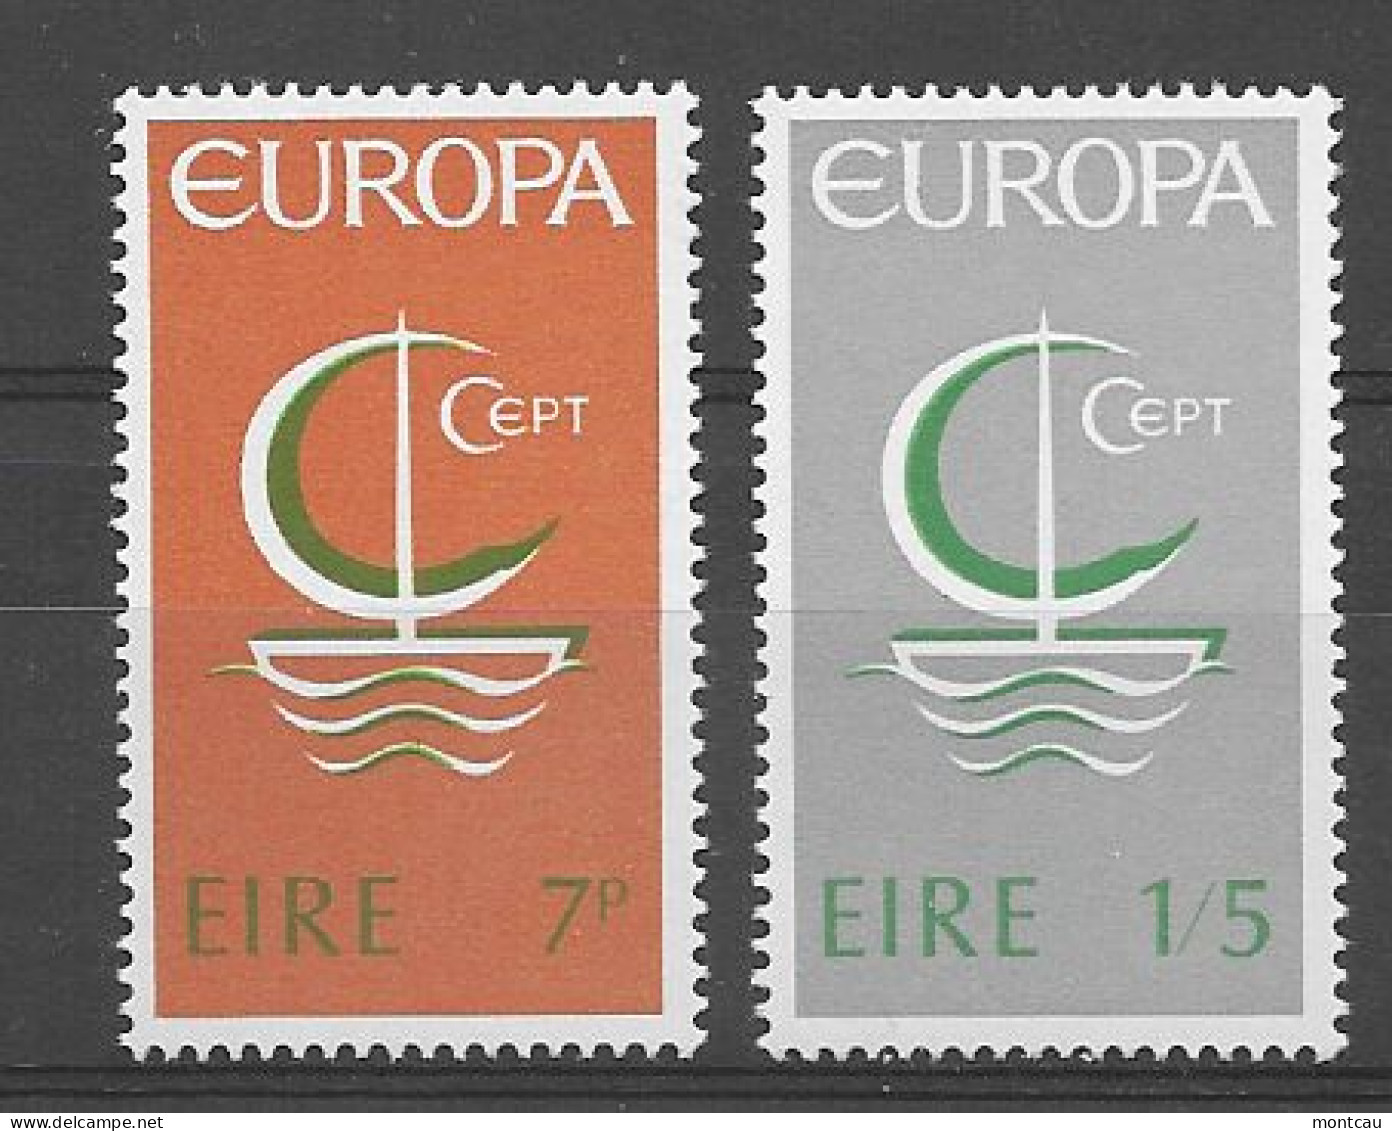 Irlanda 1966.  Europa Mi 188-89  (**) - 1966